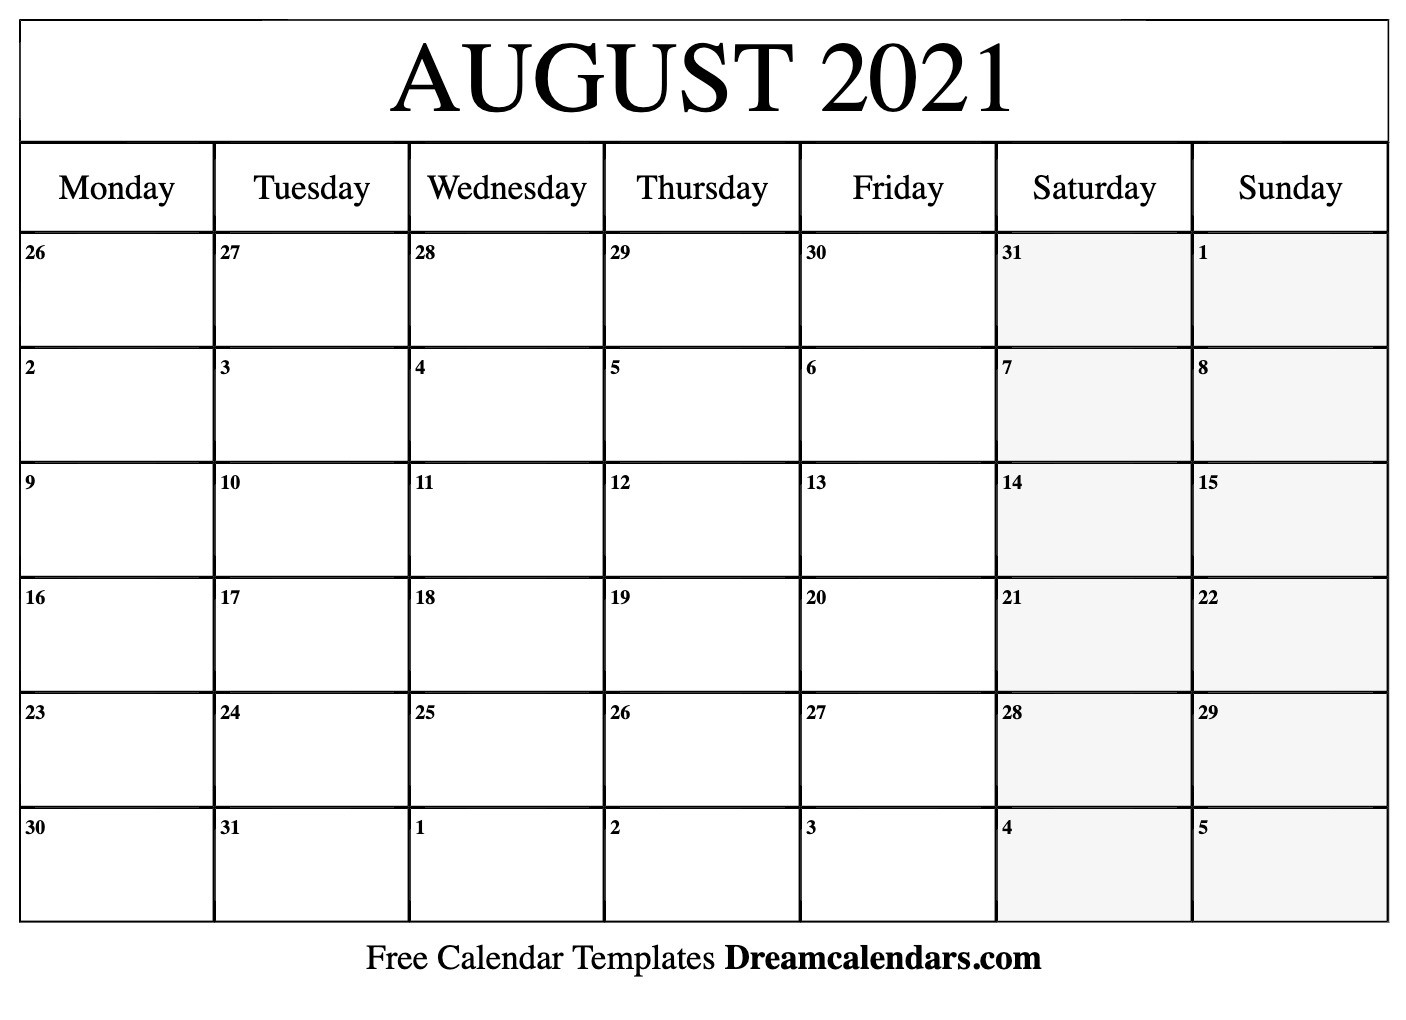 August 2021 Calendar | Free Blank Printable Templates-Monday-Friday Calendar Printable 2021